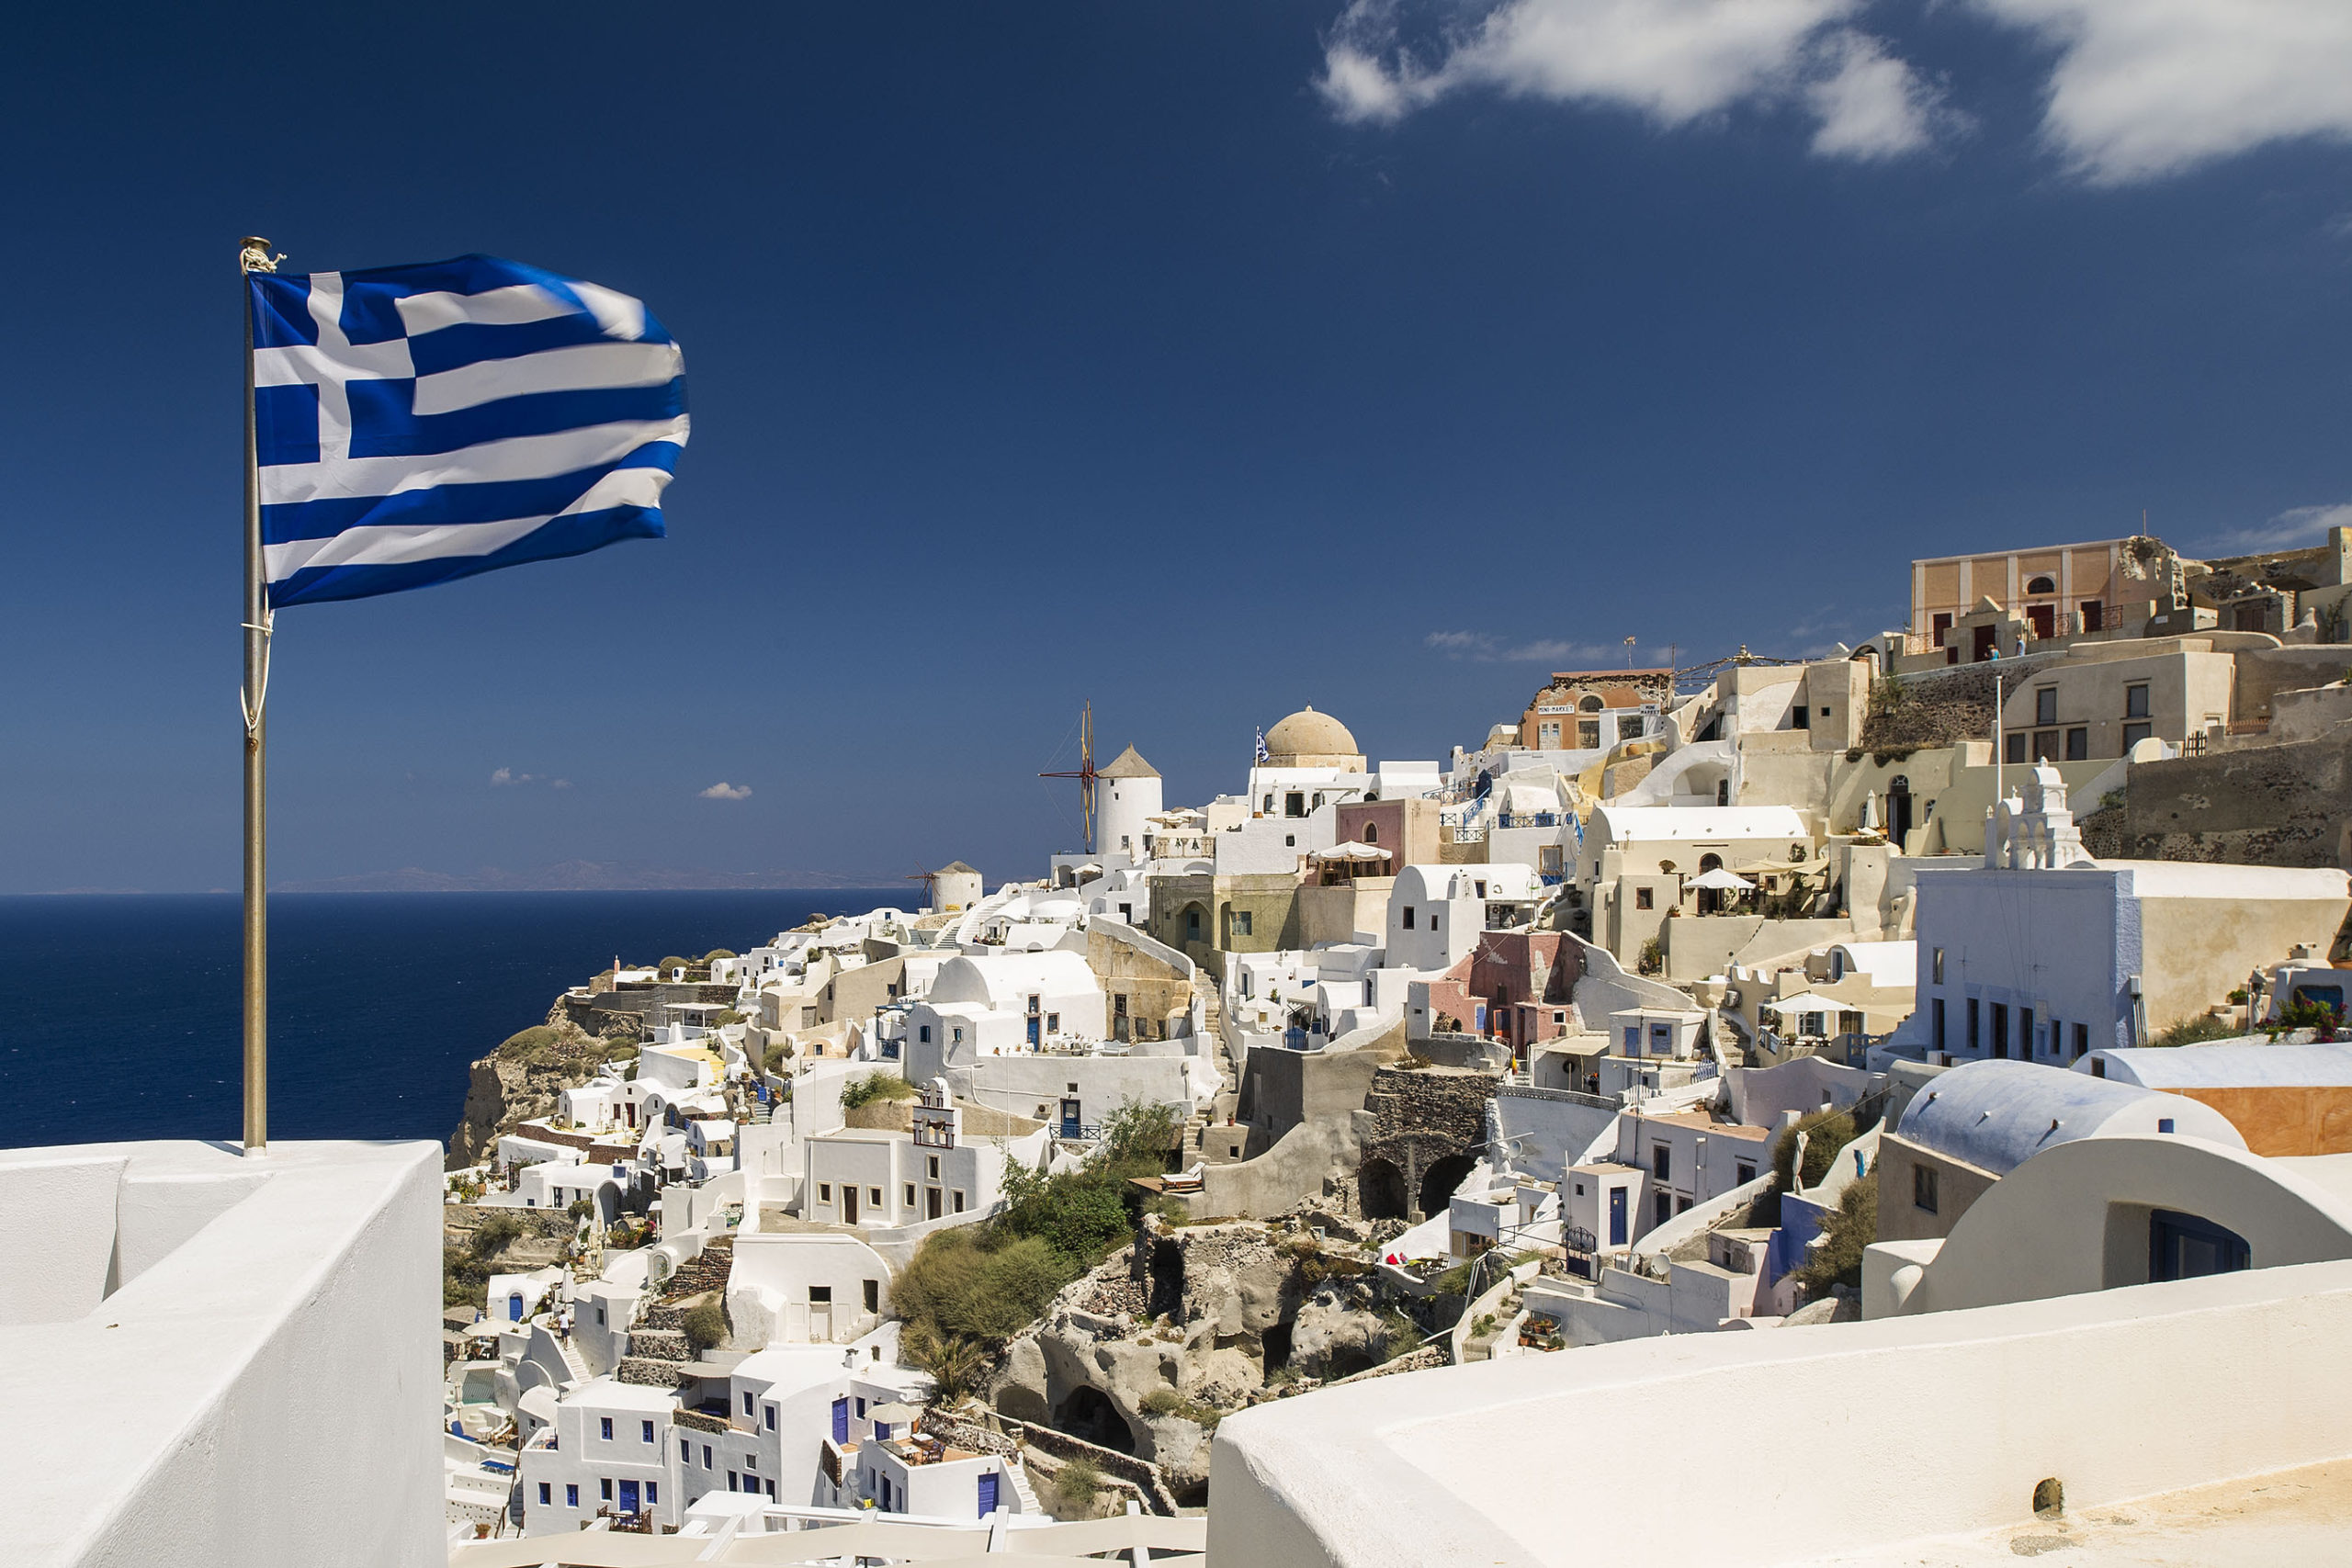 Greece cruise